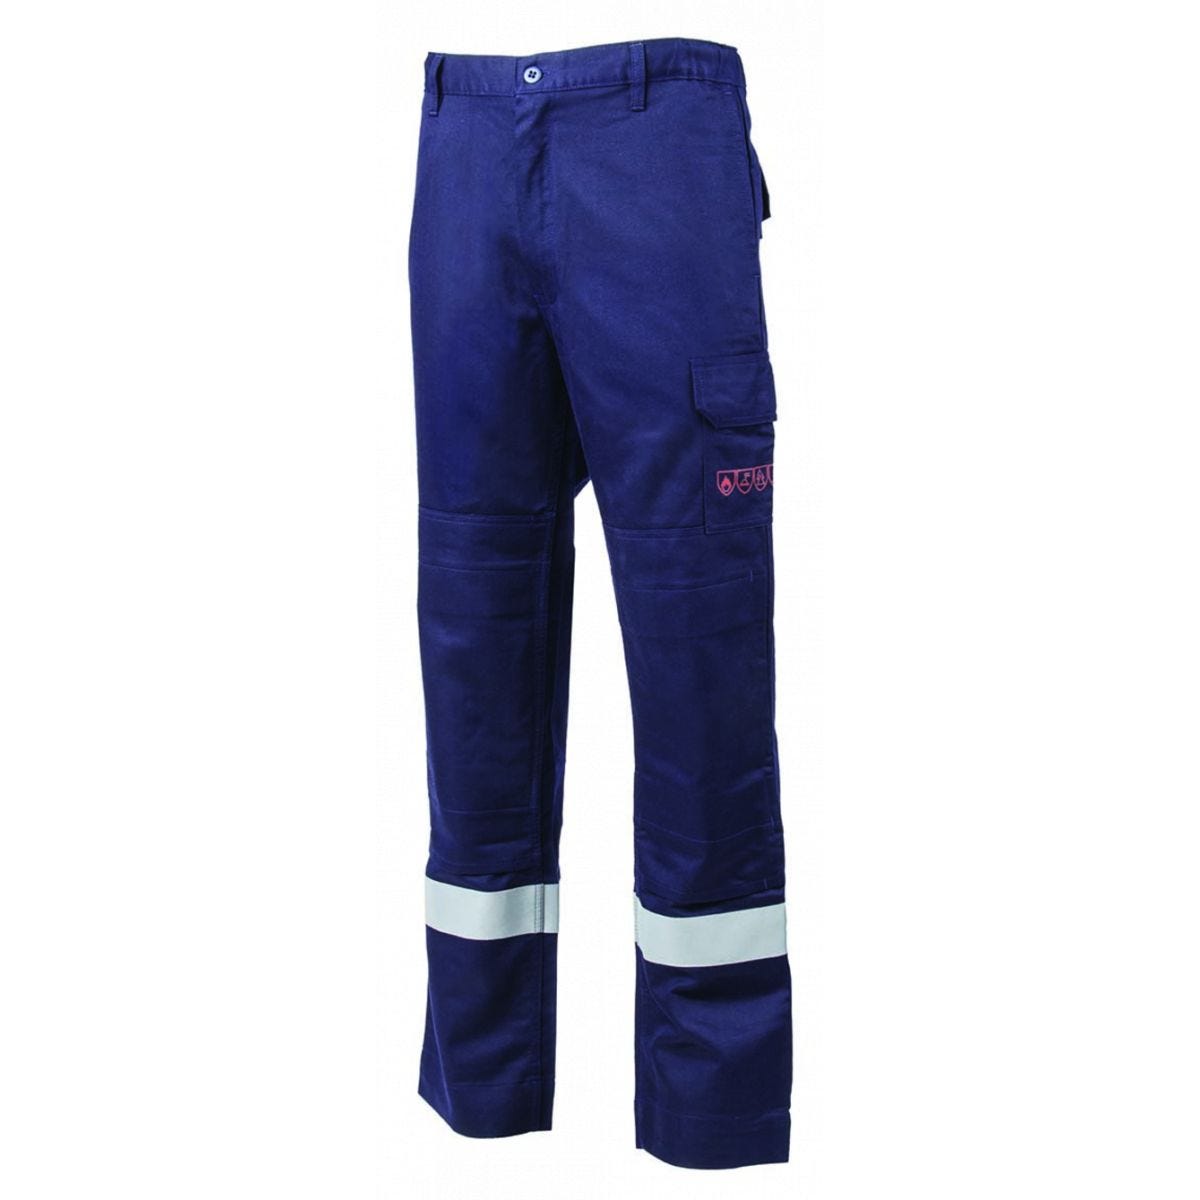 THOR Pantalon multirisques + bandes, 300g/m², Bleu - COVERGUARD - Taille 3XL 0